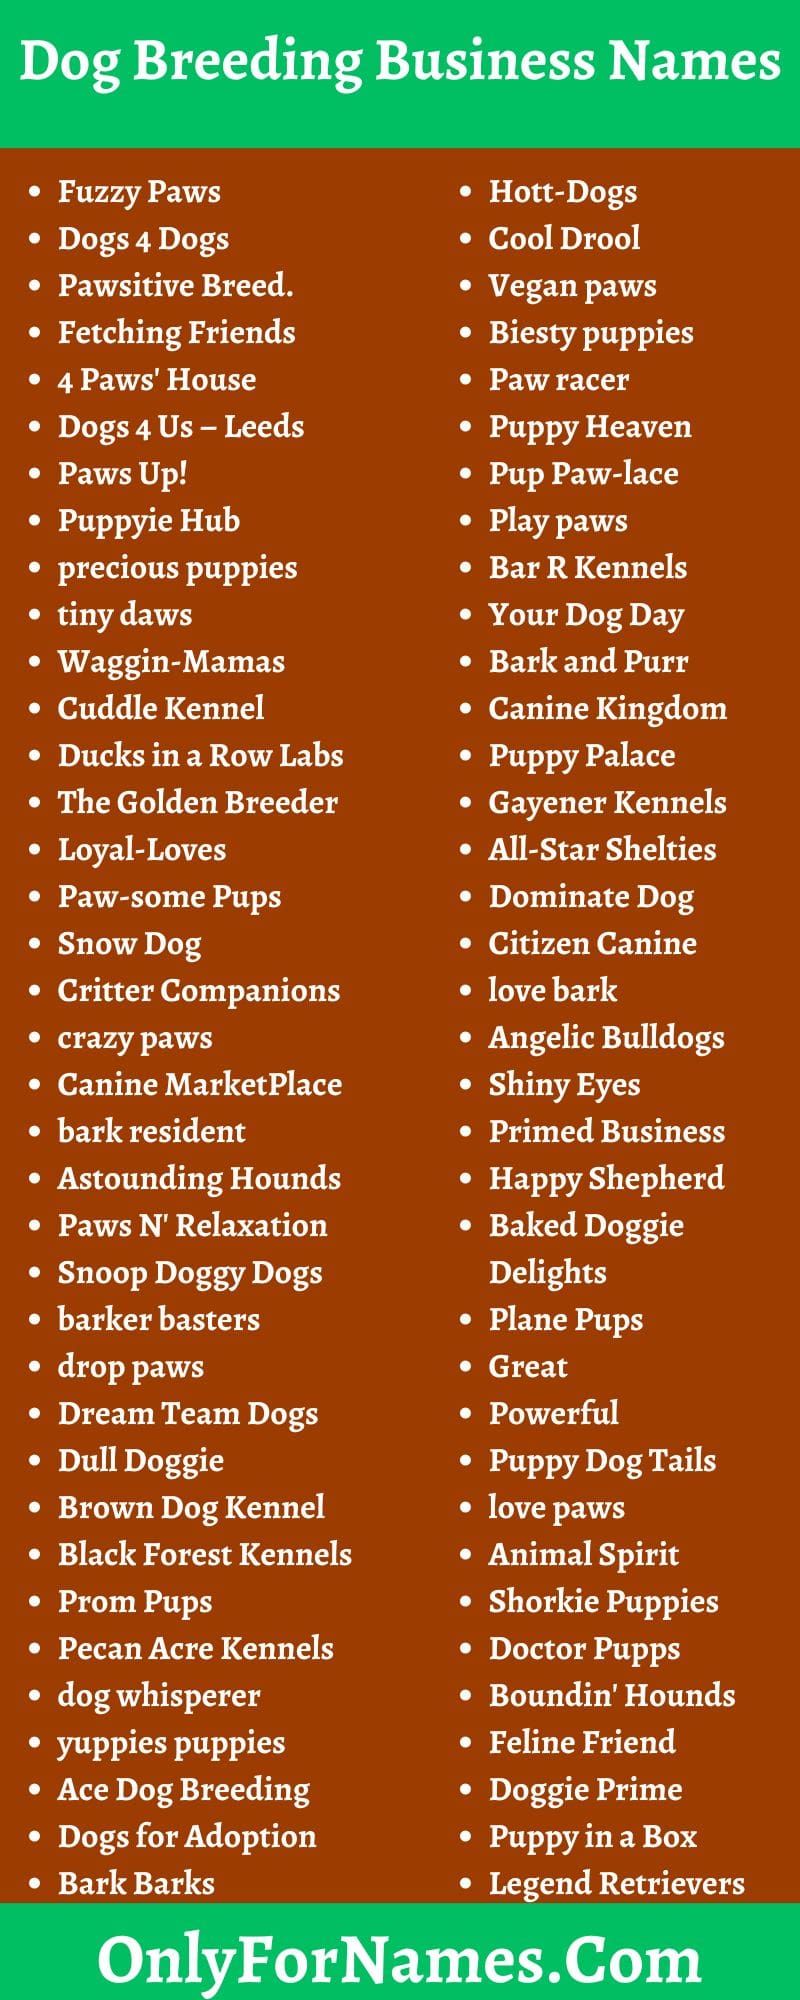 Dog Breeding Business Names